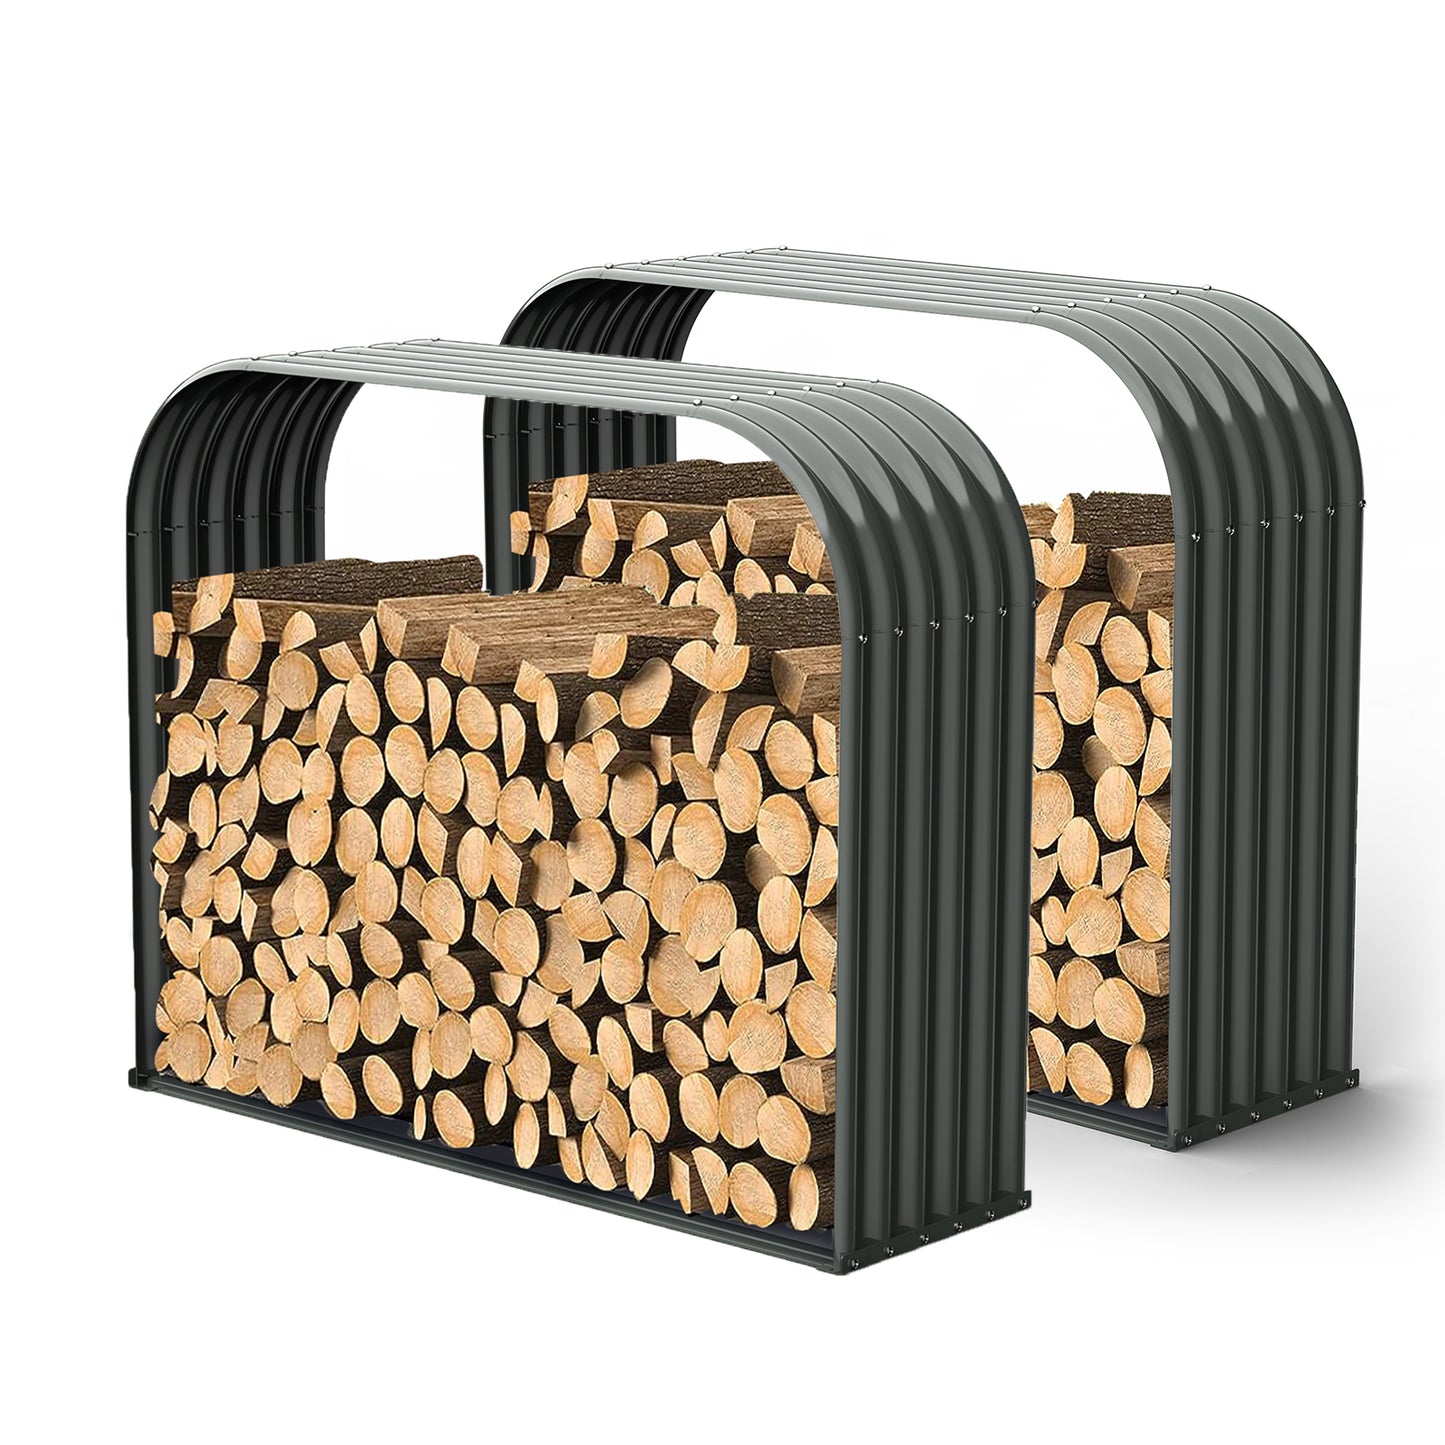 Set of 2:18"D x 59"W x 48"H,32 cube feet,Heavy Duty Log Holder, Galvanized Steel Firewood Storage Shed,Gray